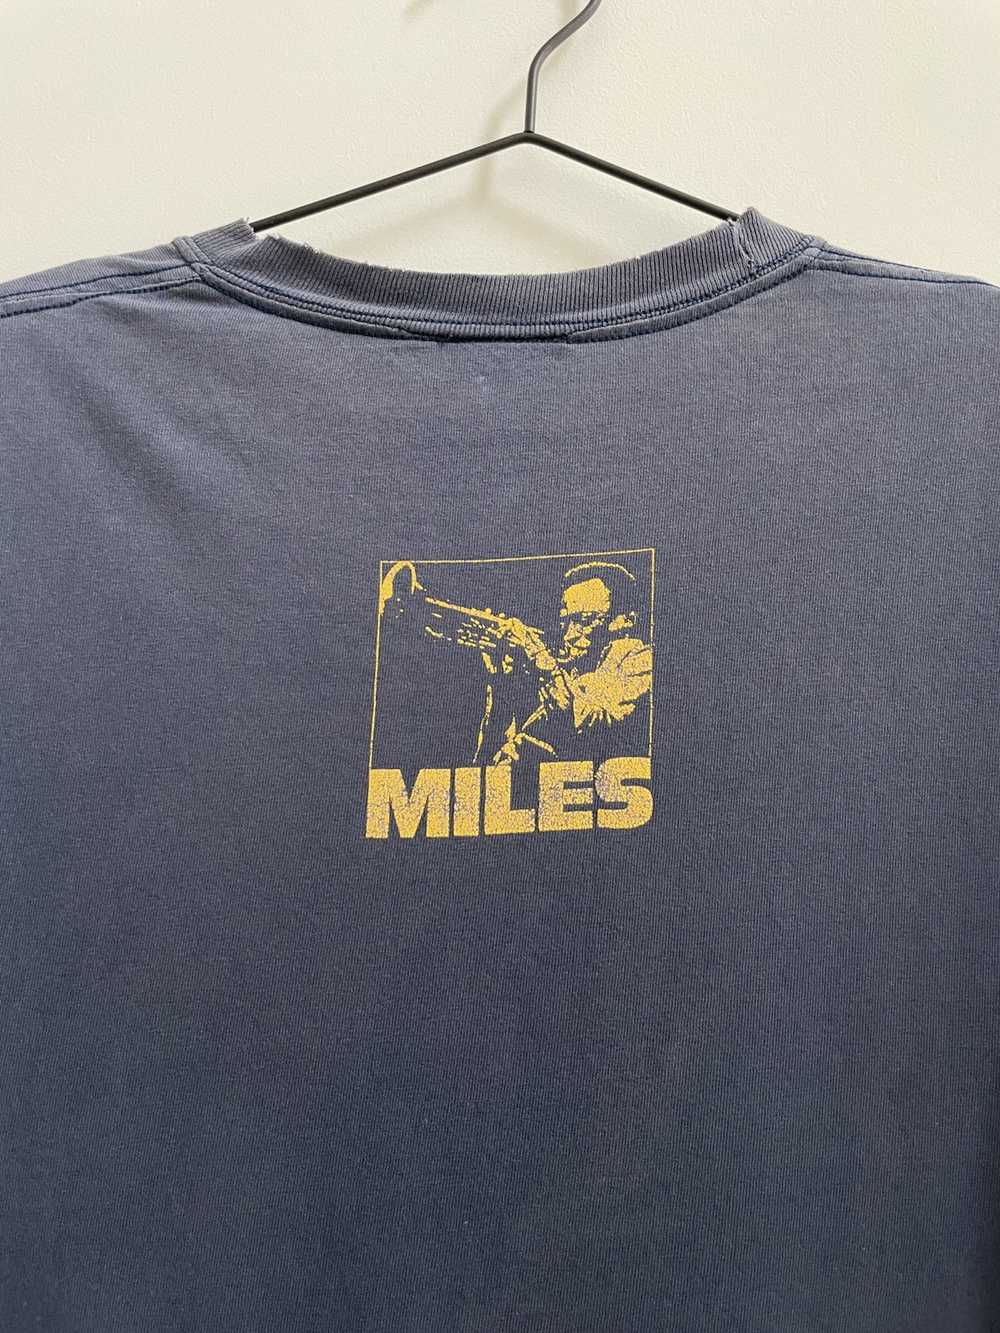 Band Tees × Vintage Vintage Miles Davis T-Shirt - image 4